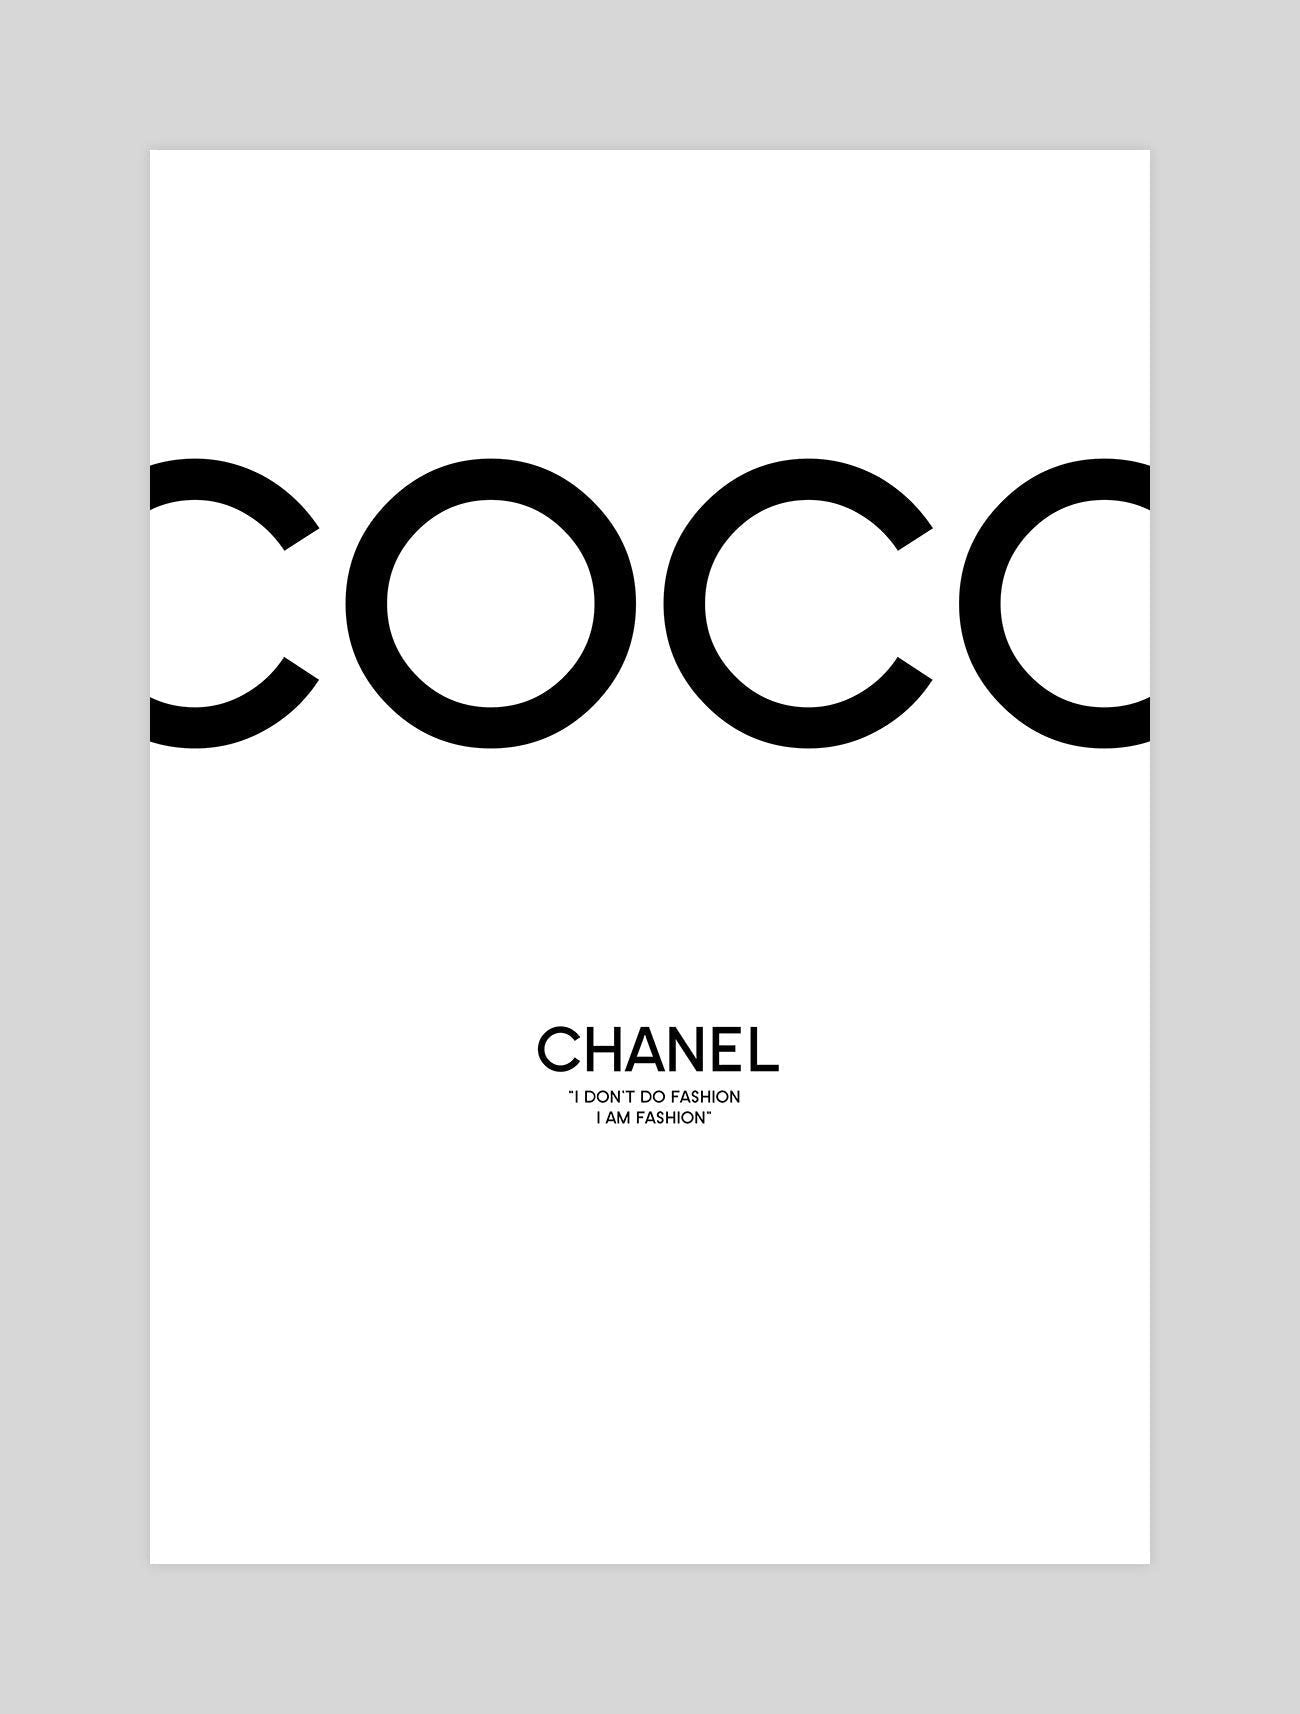 Mua Chanel Coco Mademoiselle Intense Women EDP Spray 34 oz trên Amazon Mỹ  chính hãng 2023  Giaonhan247